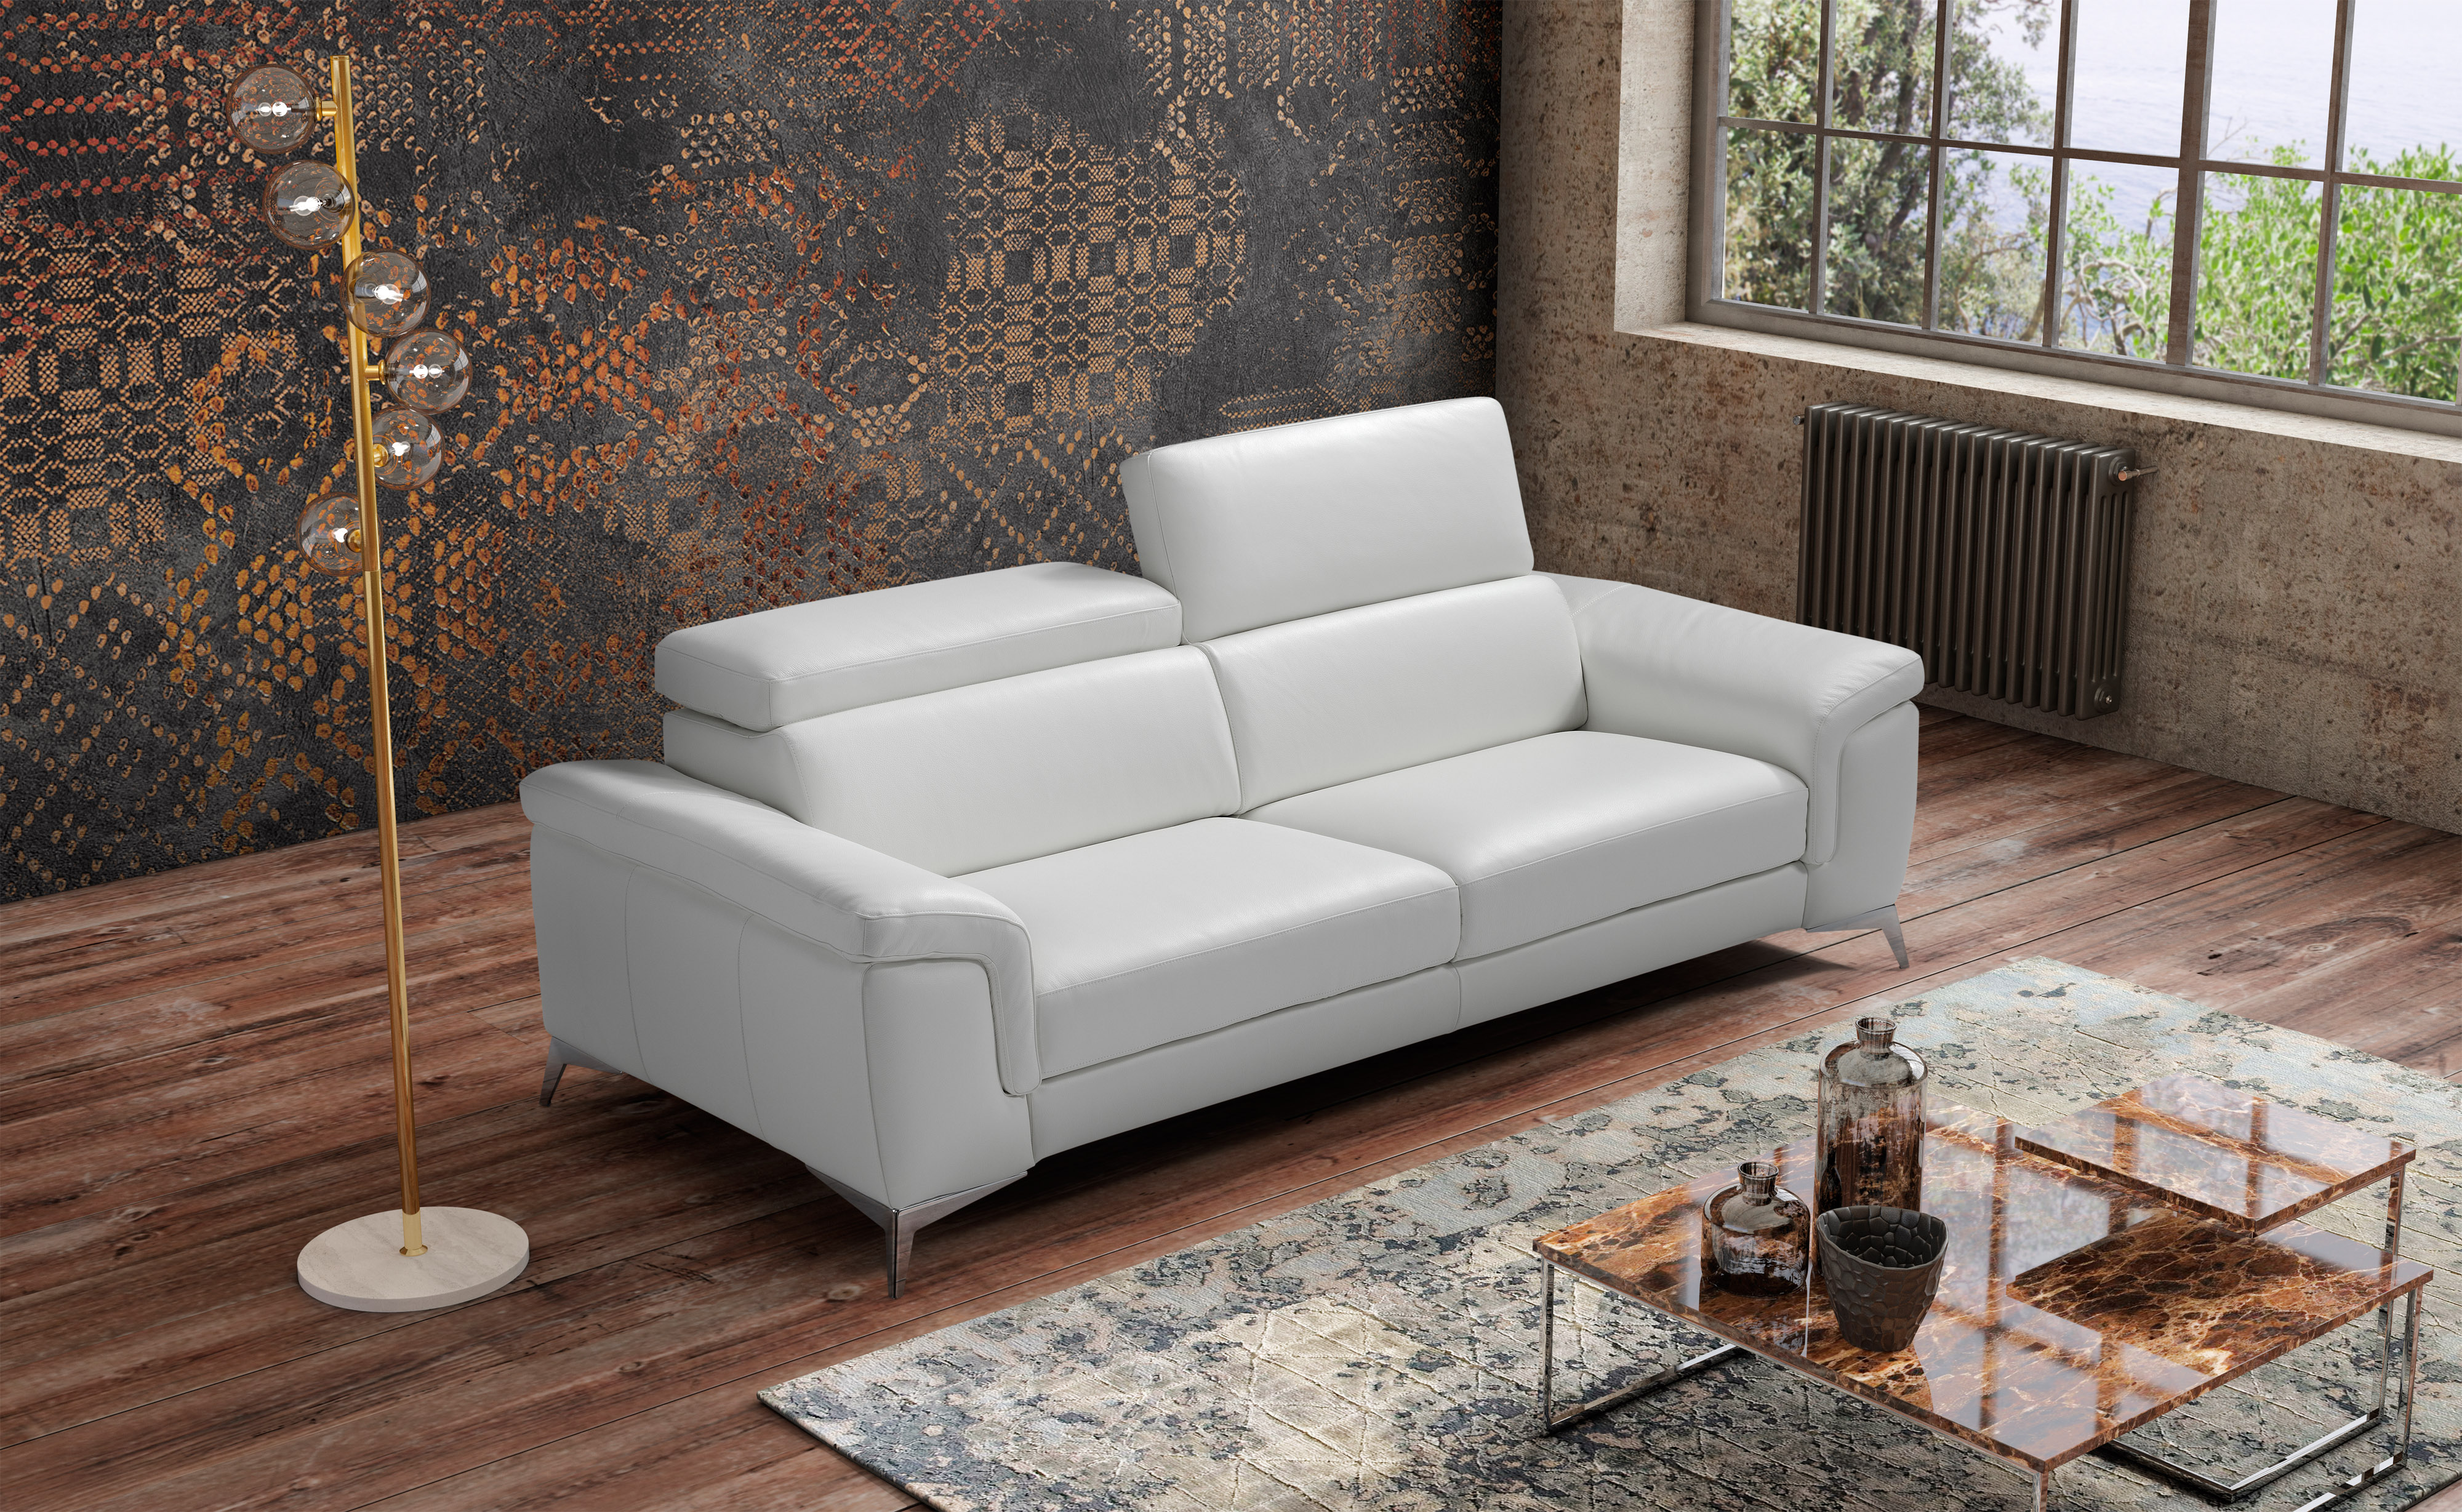 Modern Living Room Sofa In Italian Leather Miami Beach Fl Whiteline Flavio